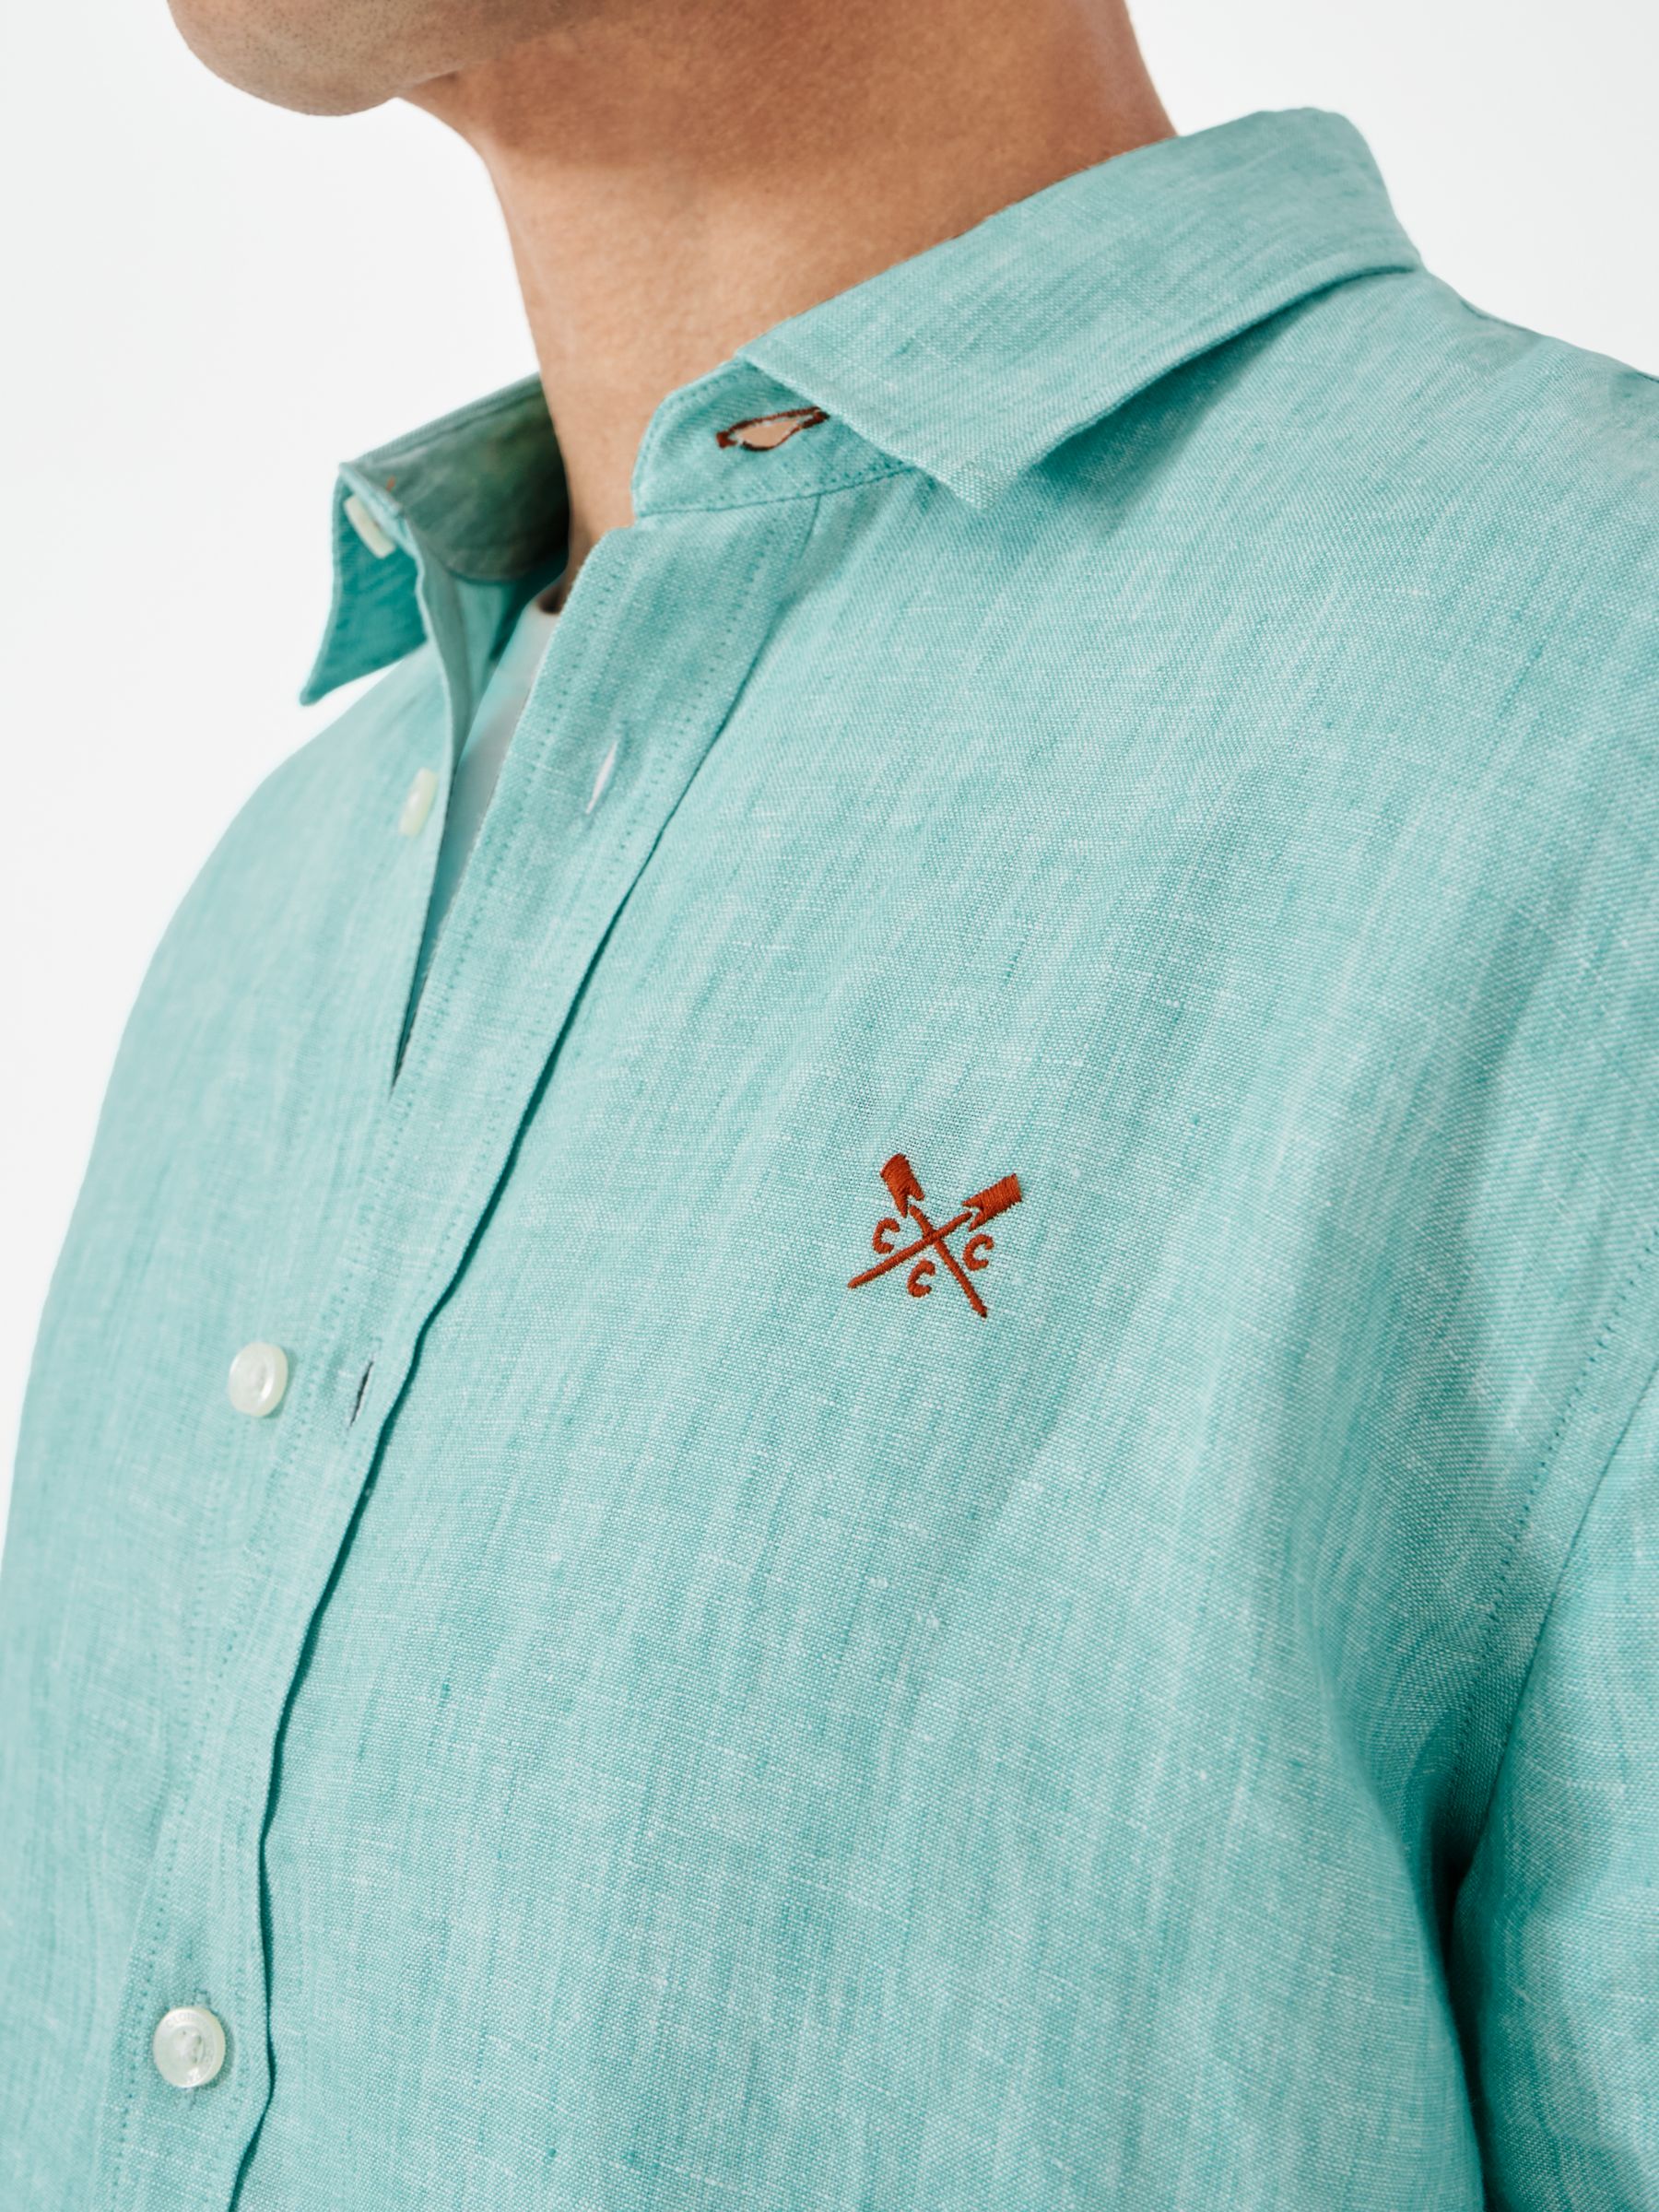 Crew Clothing Long Sleeve Linen Classic Shirt, Turquoise Blue, XS